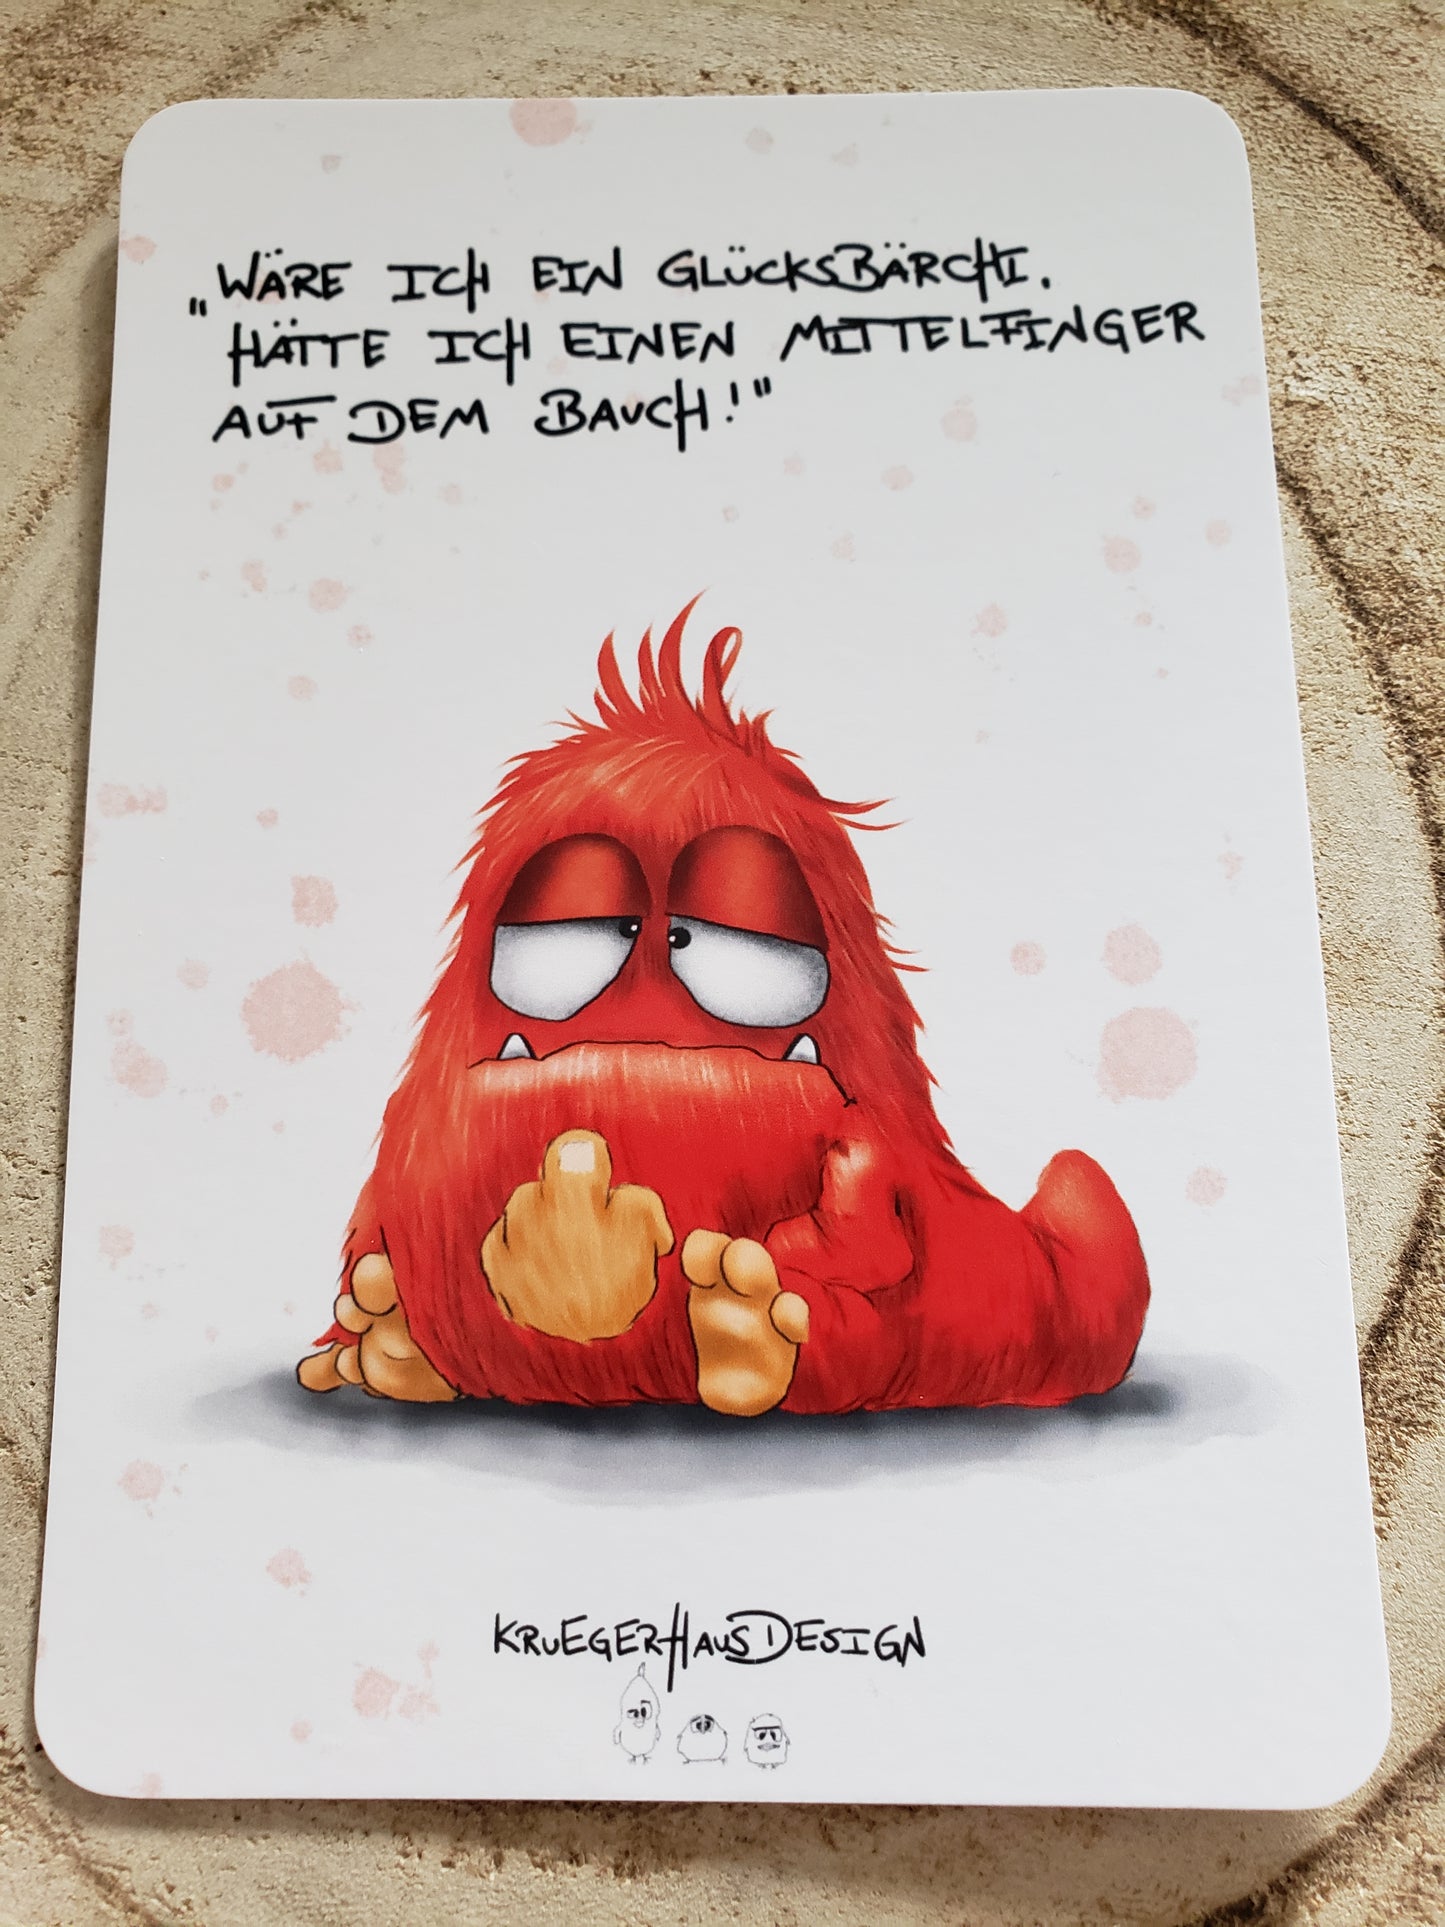 Postkarte Monster Kruegerhausdesign bunt "Wäre ich ein Glücksbärchi..."